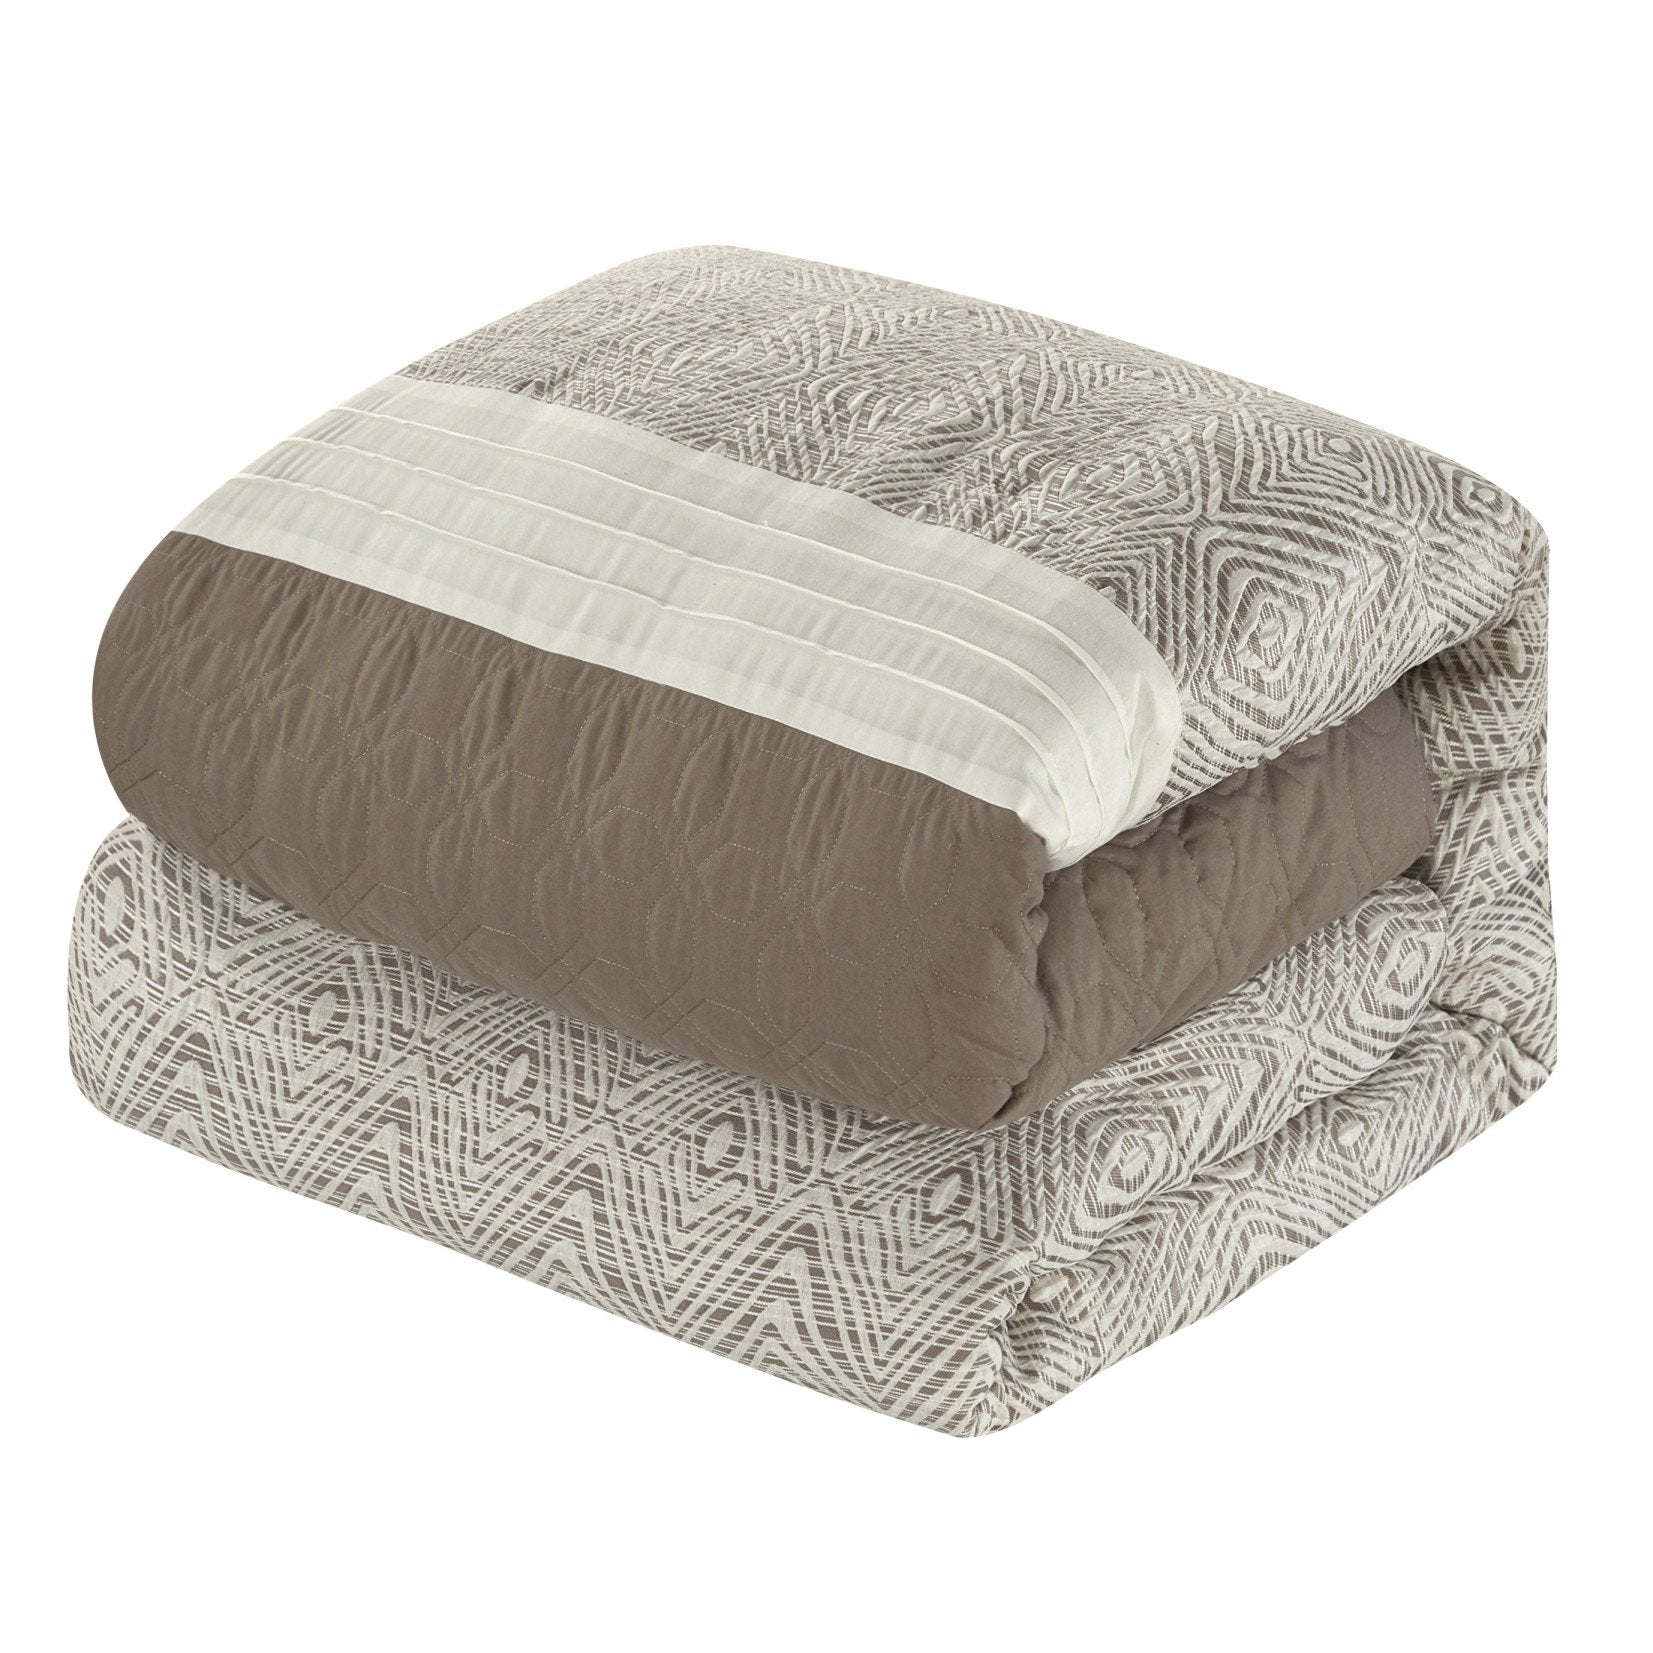 Imani 6 Piece Jacquard Comforter Set